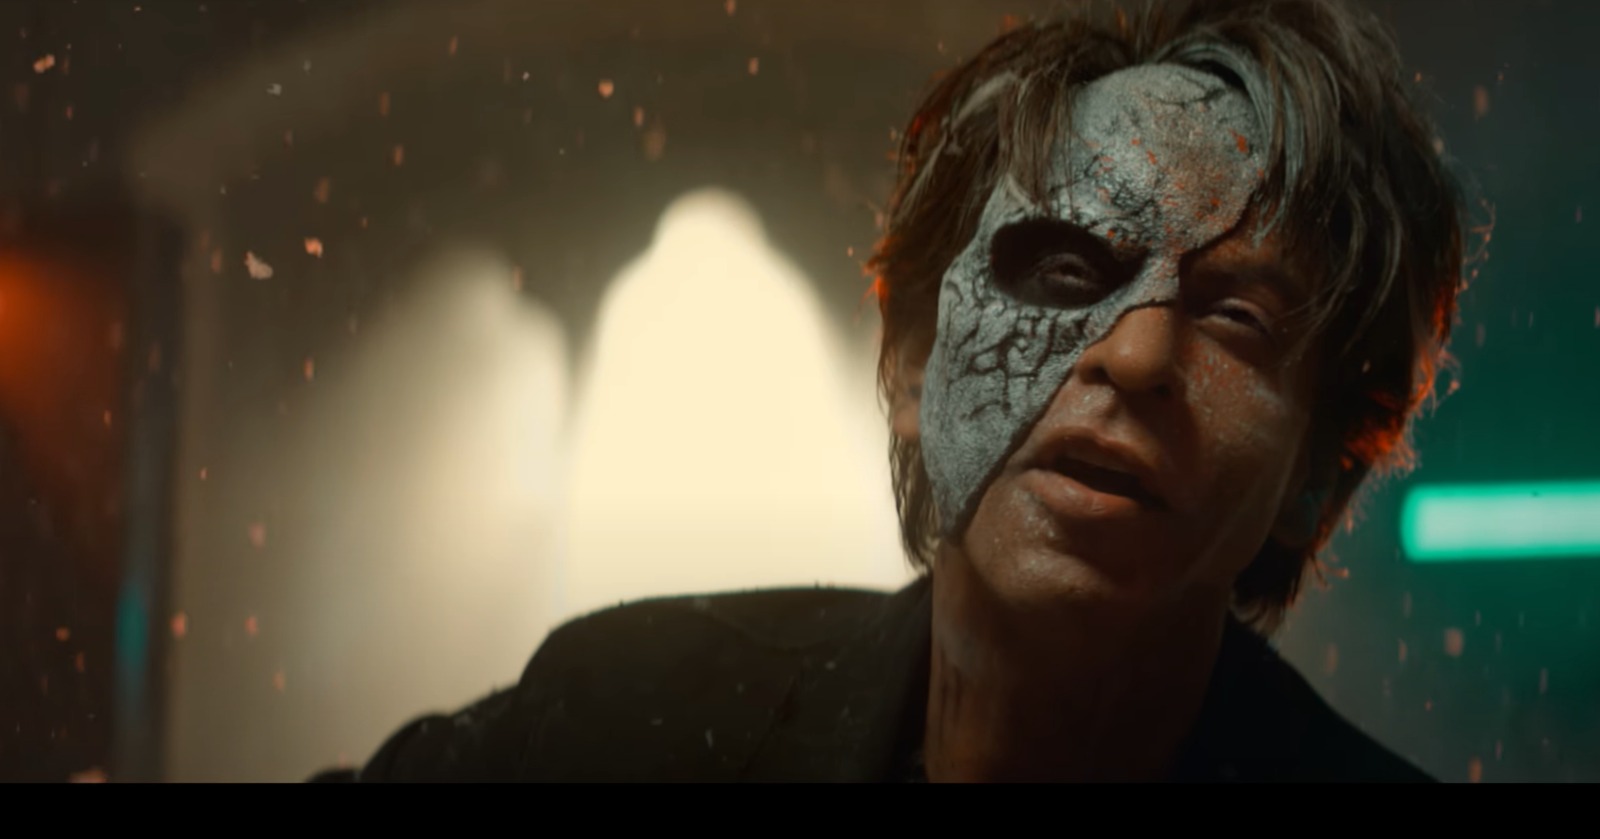 Shah Rukh Khan in a mask